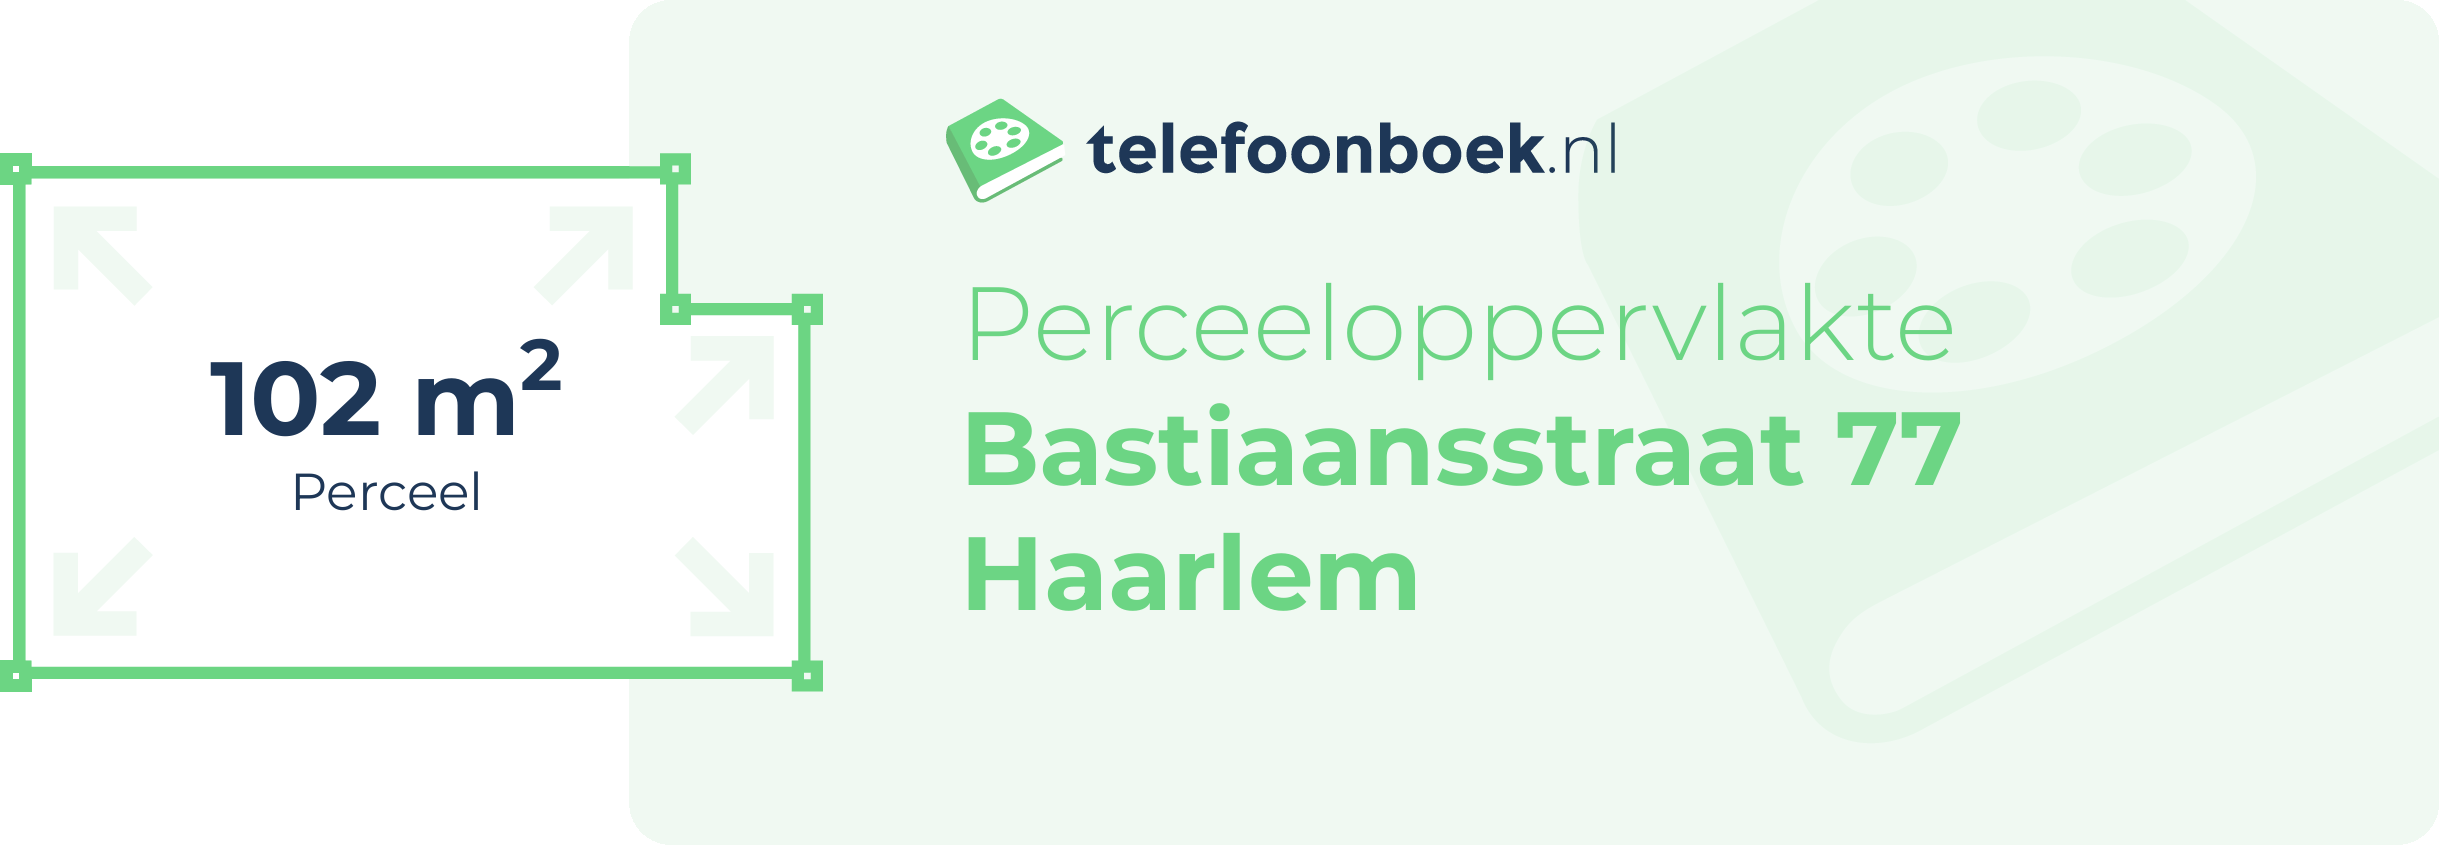 Perceeloppervlakte Bastiaansstraat 77 Haarlem